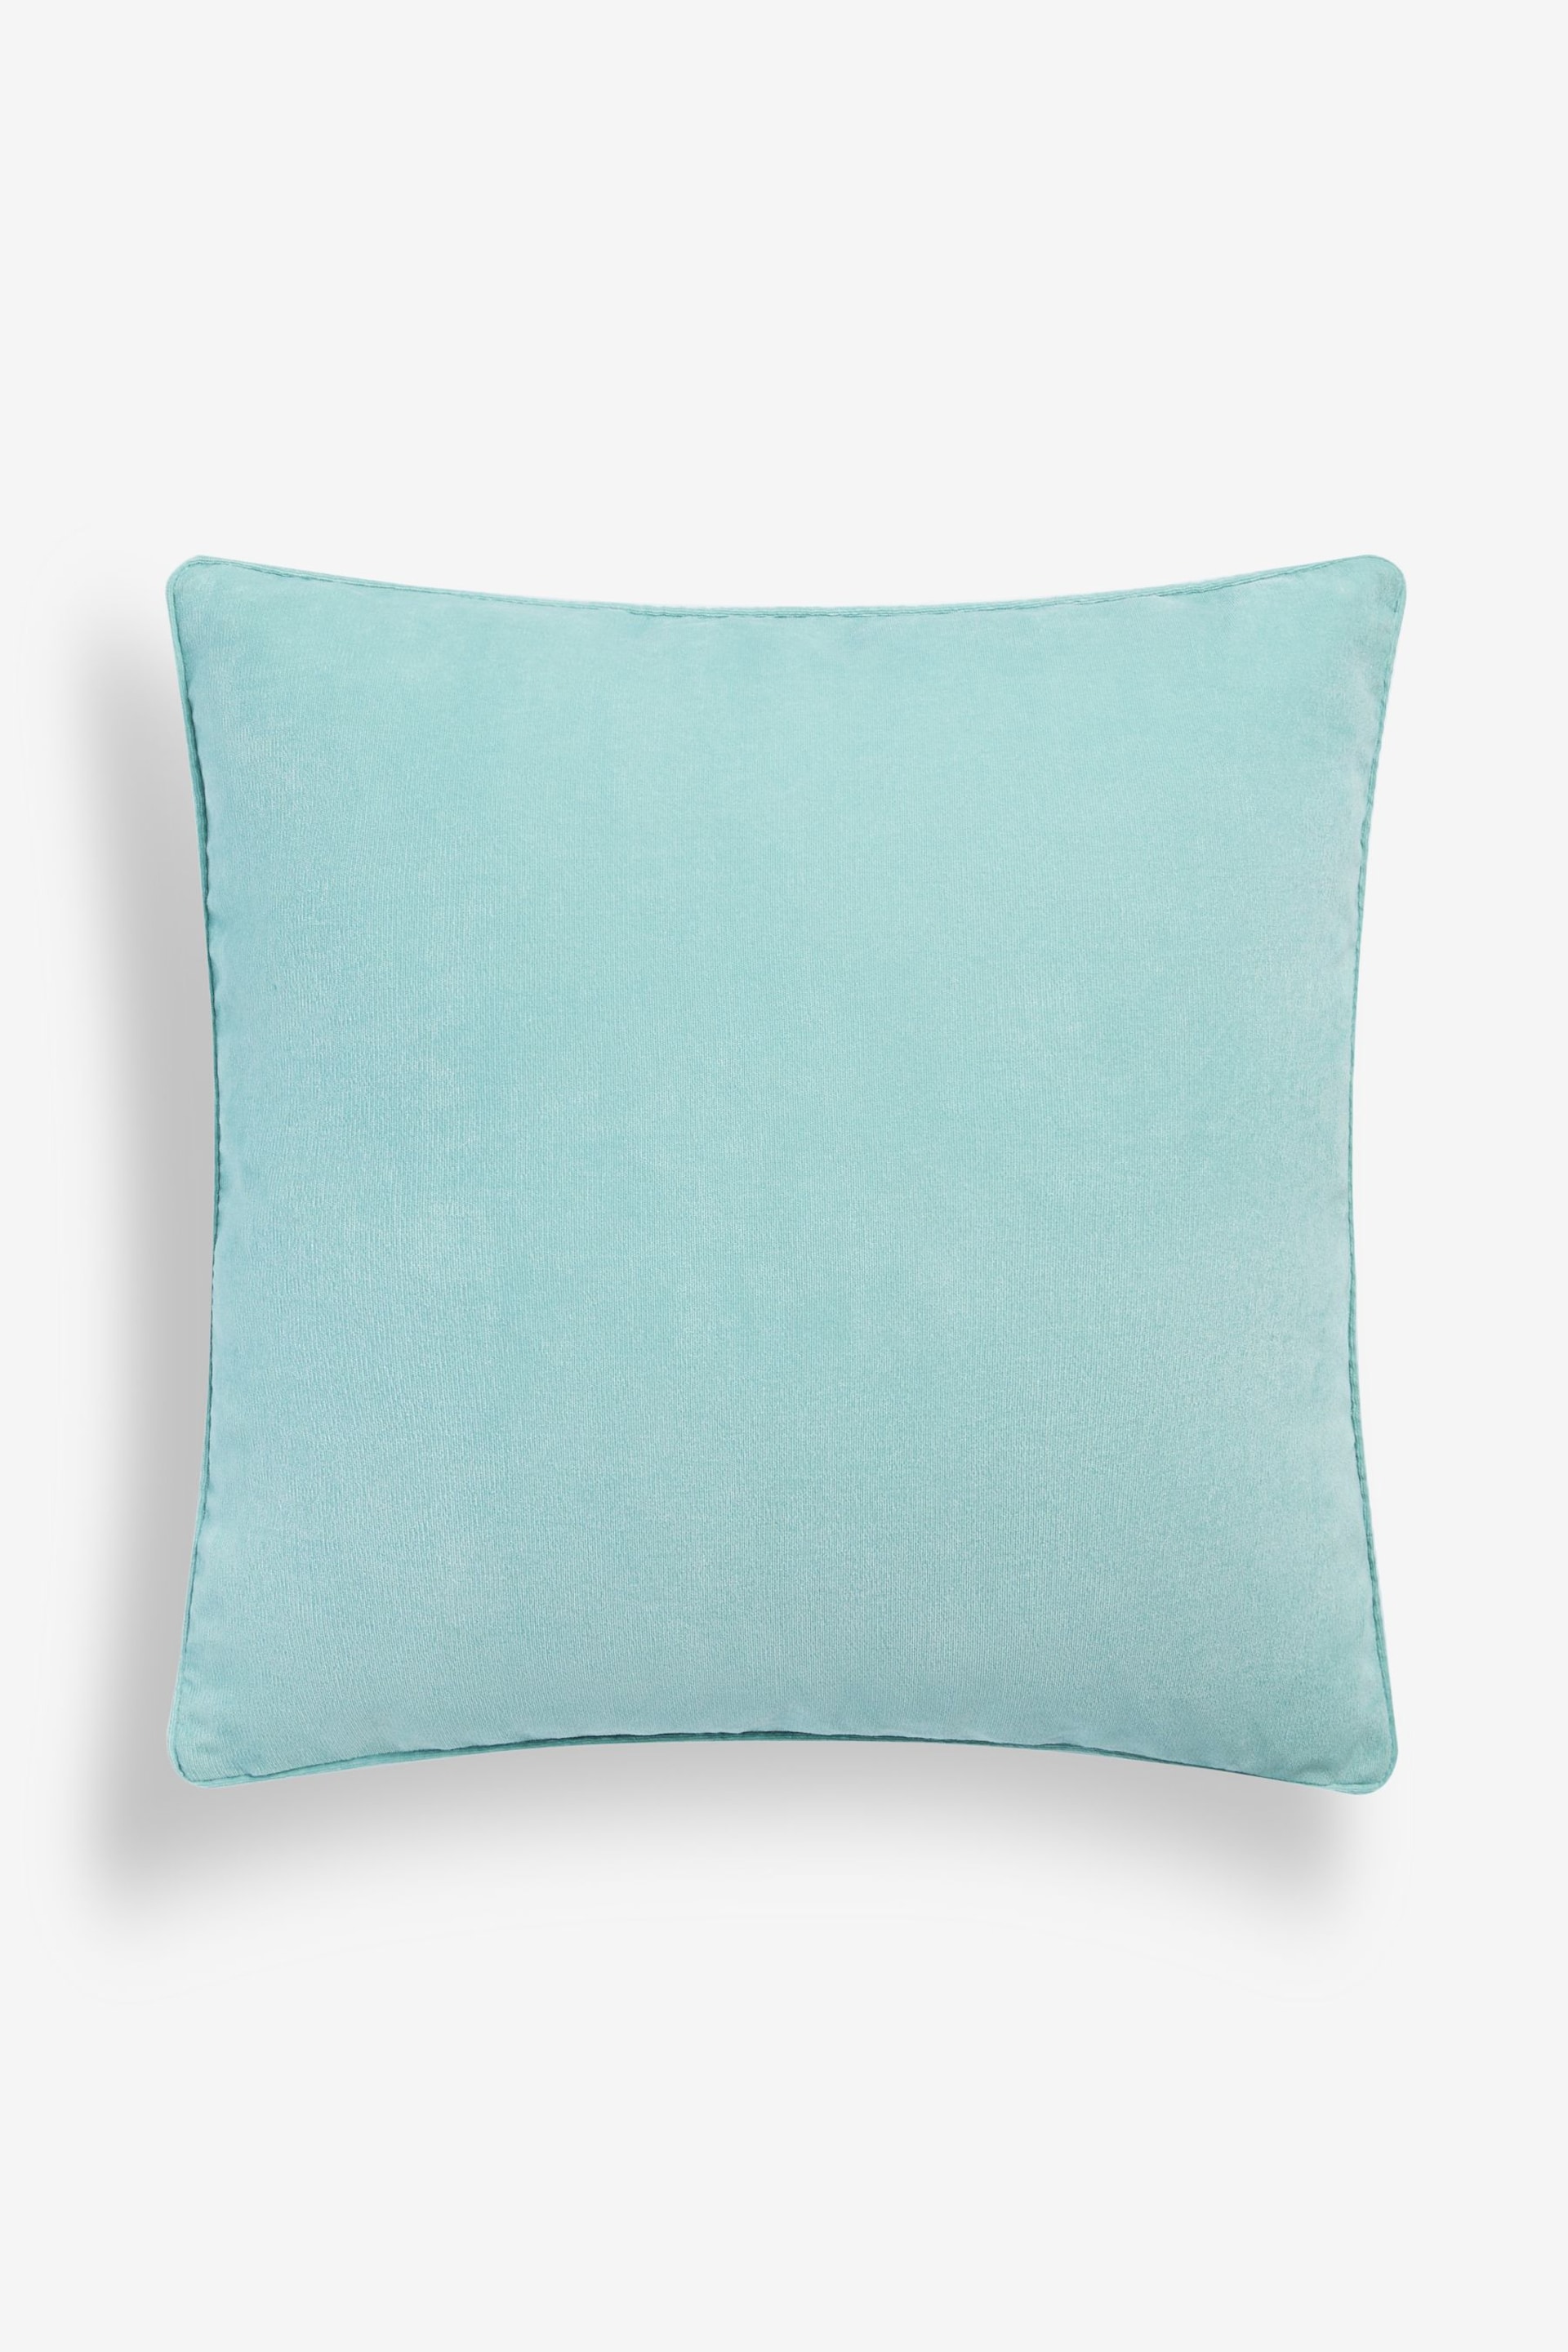 Teal Blue 59 x 59cm Soft velour Cushion - Image 5 of 6